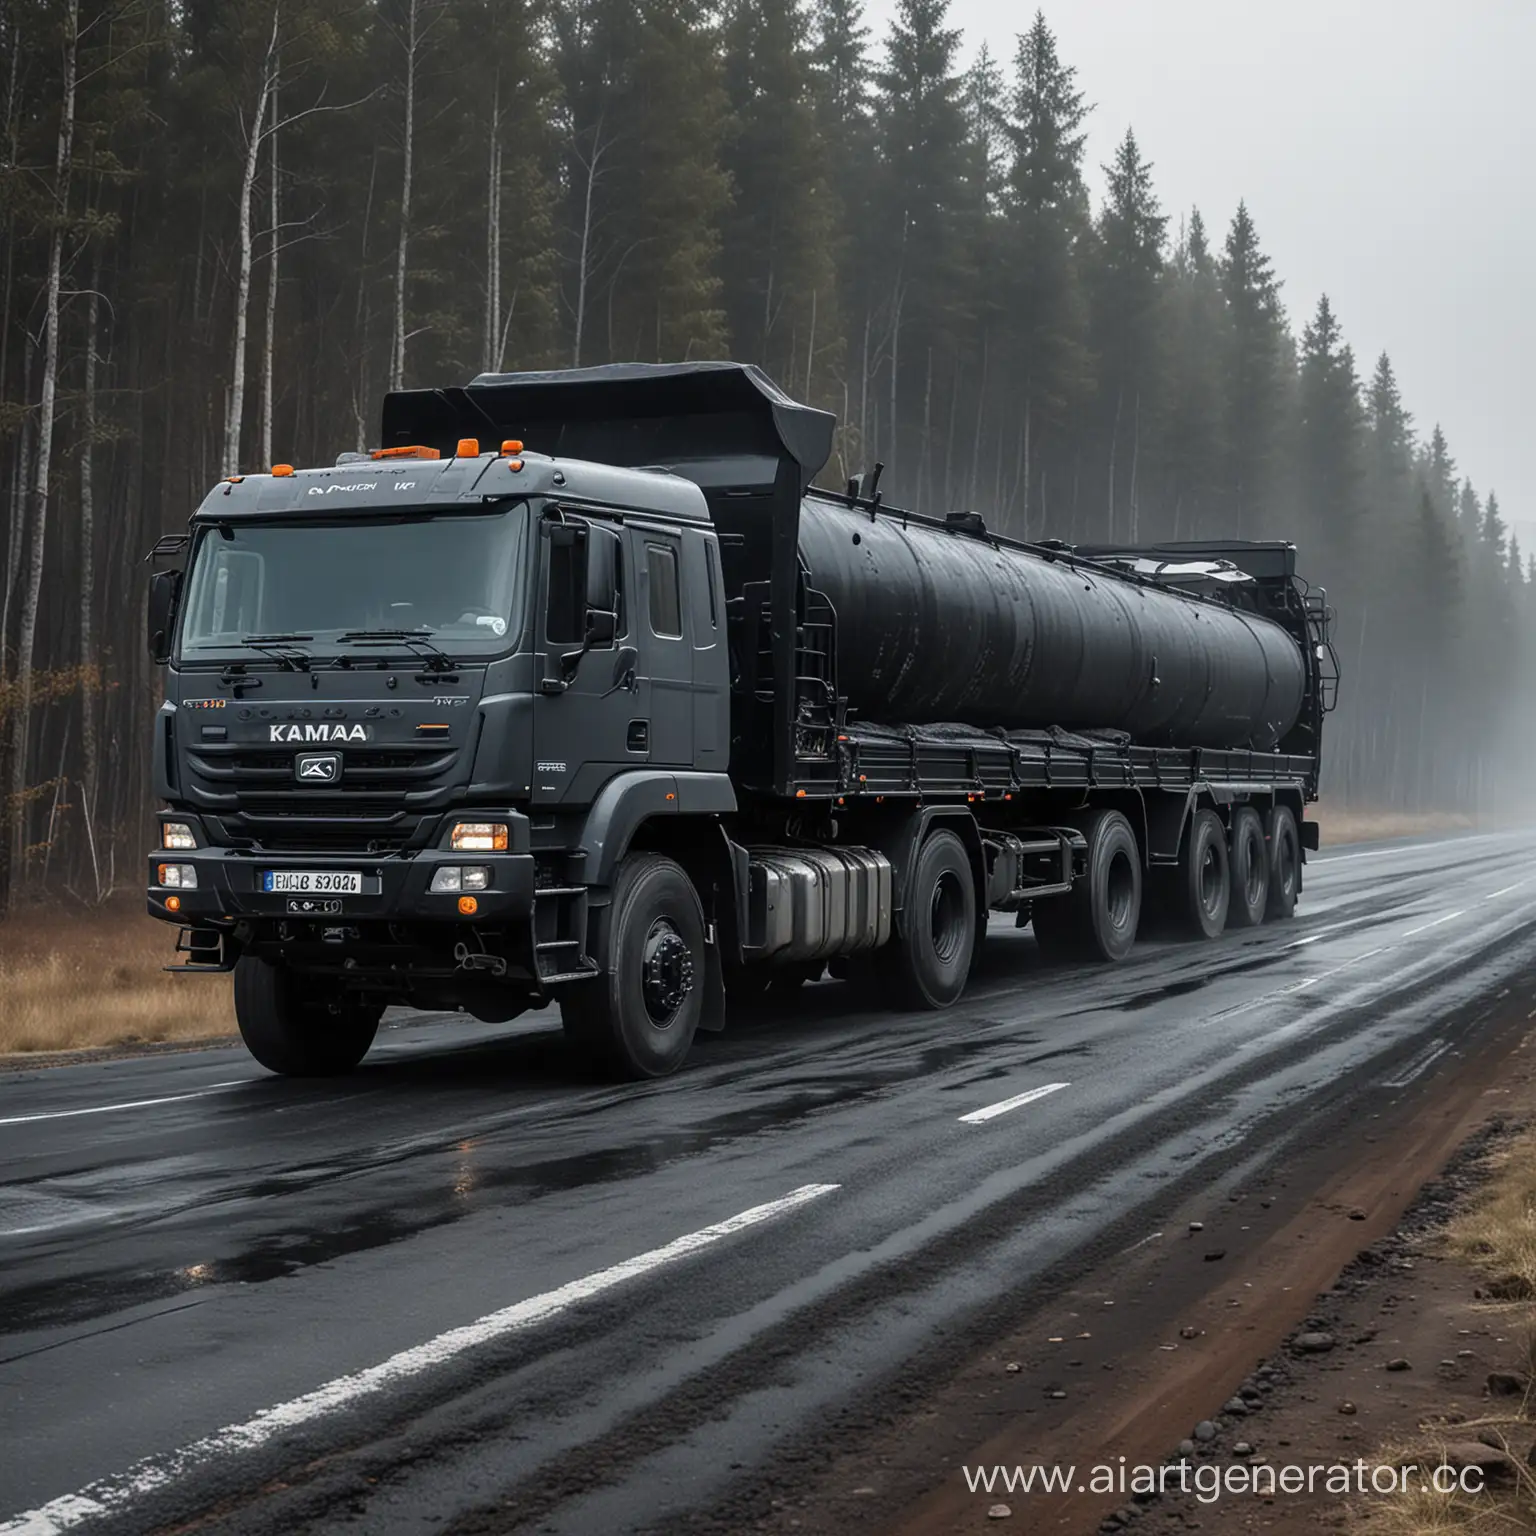 Dark-Realistic-Painting-of-KamAZ-Truck-Transporting-Bitumen-on-Road